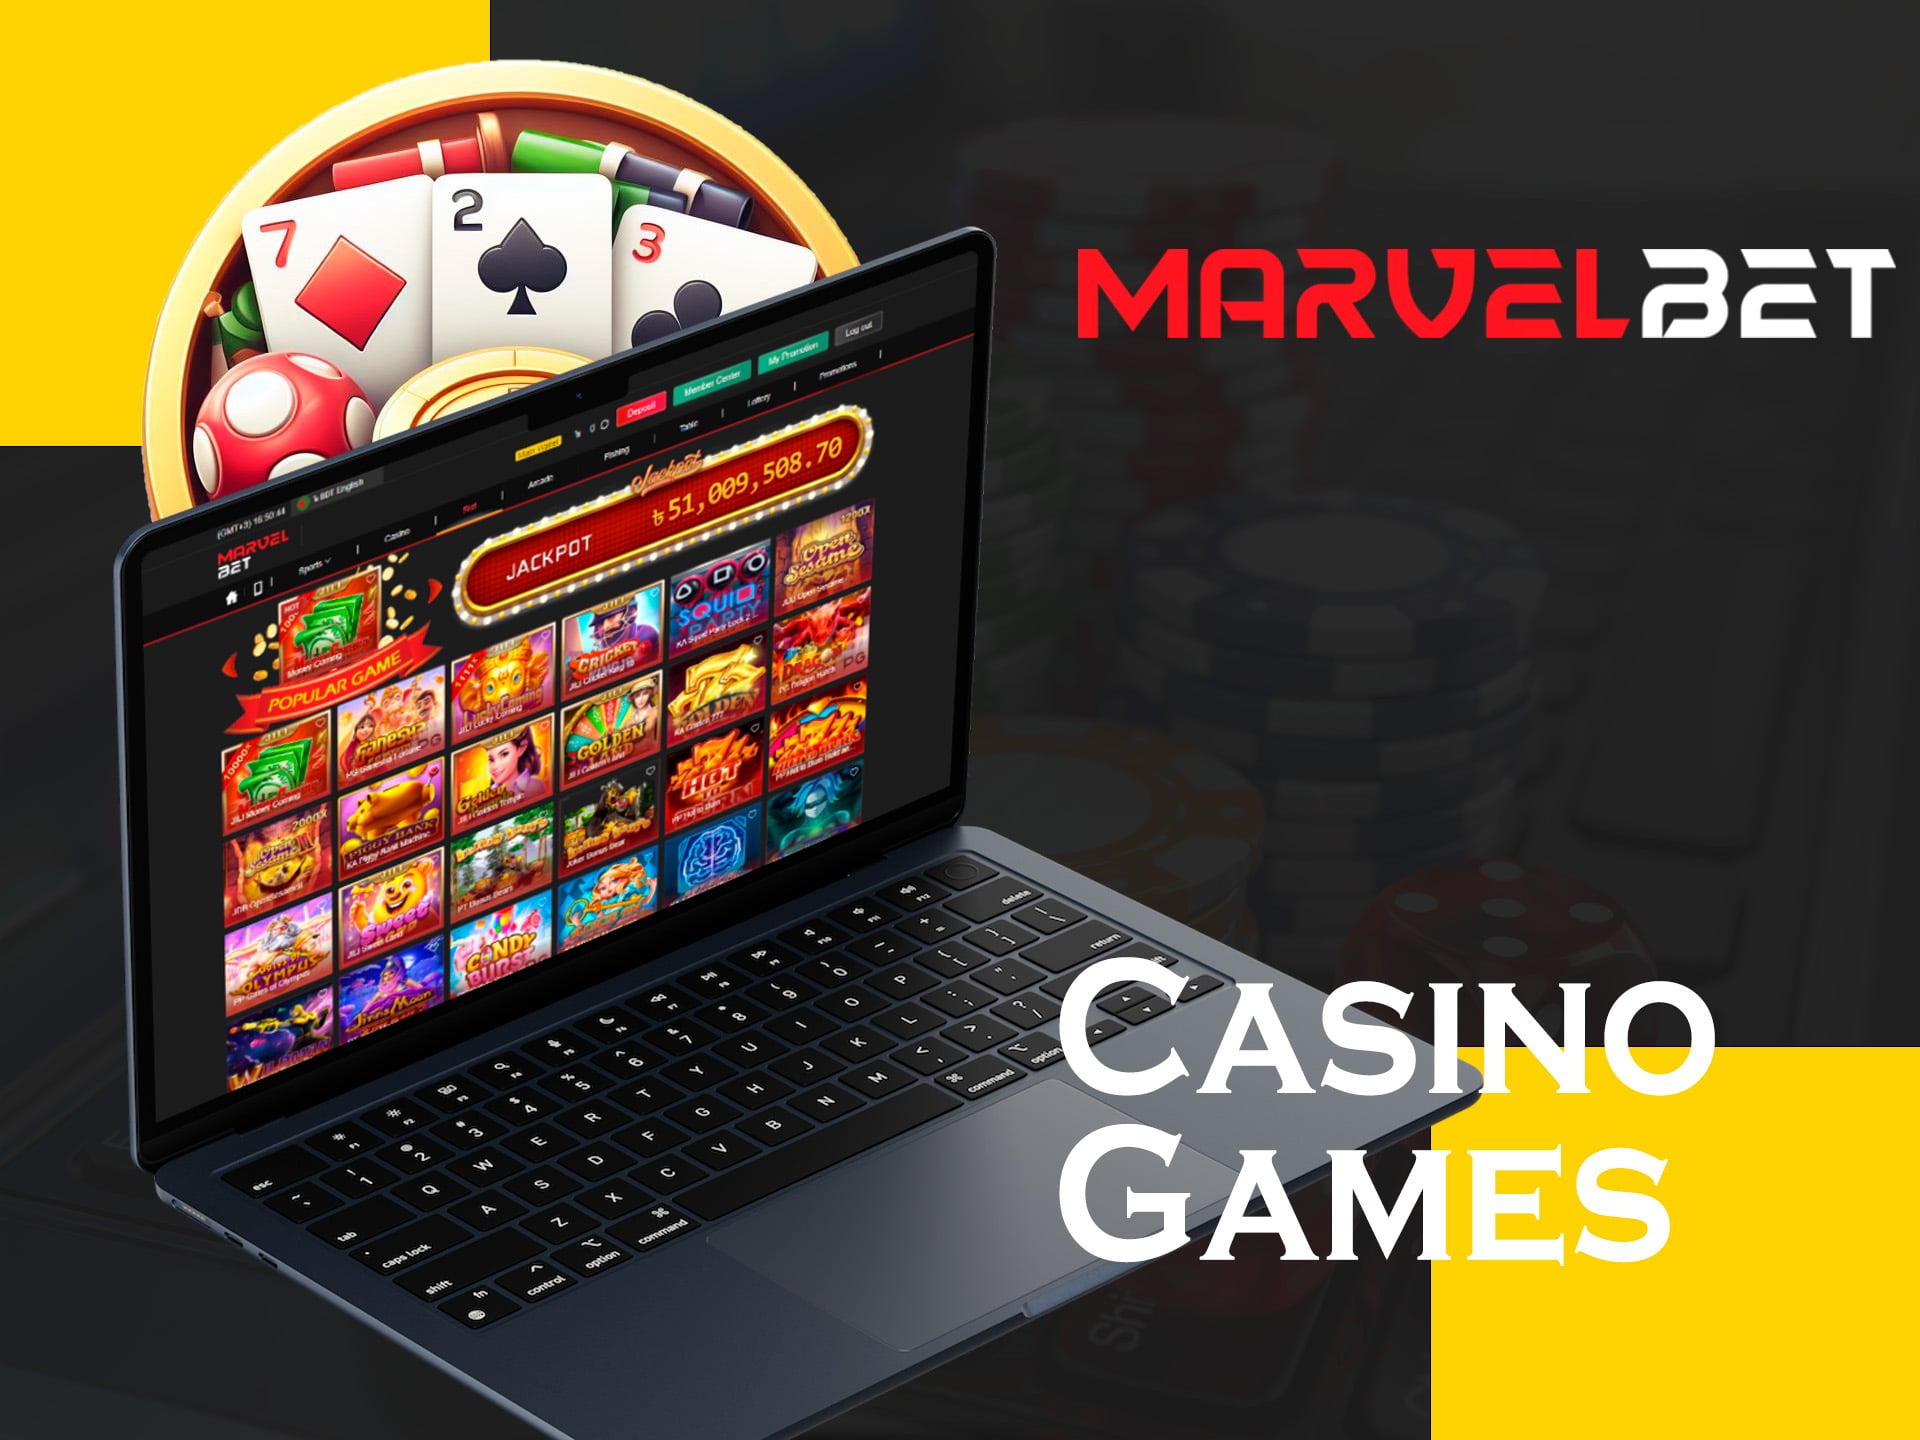 Marvelbet casino games